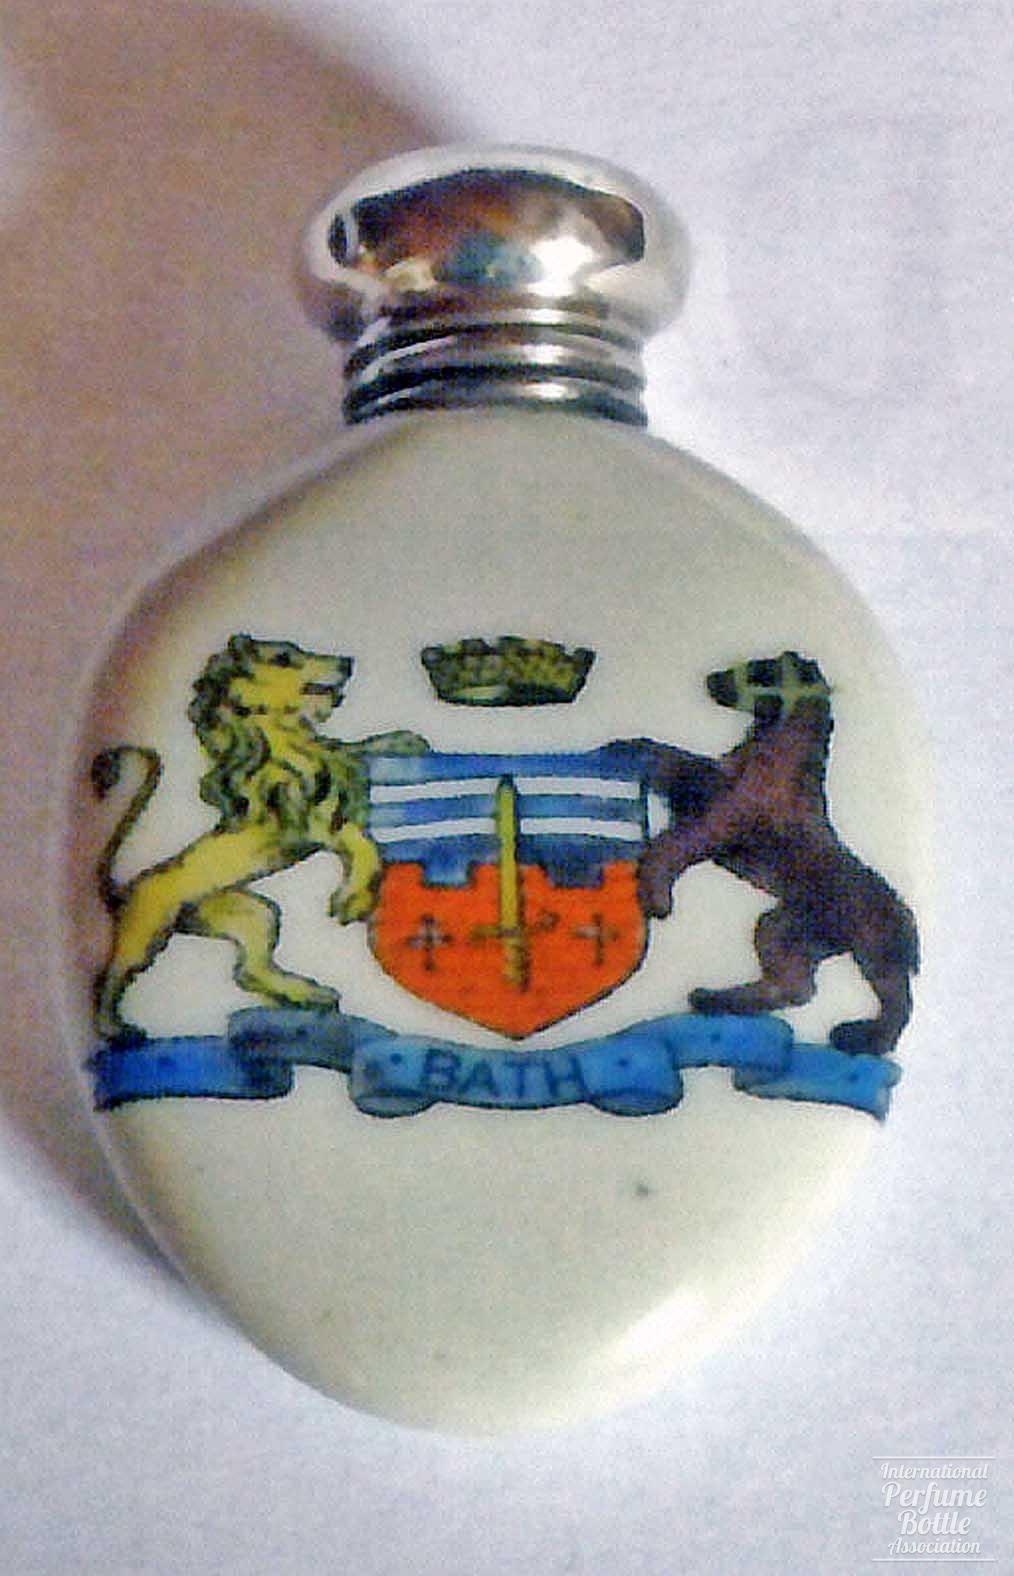 Crested Souvenir Bottle from Bath, England